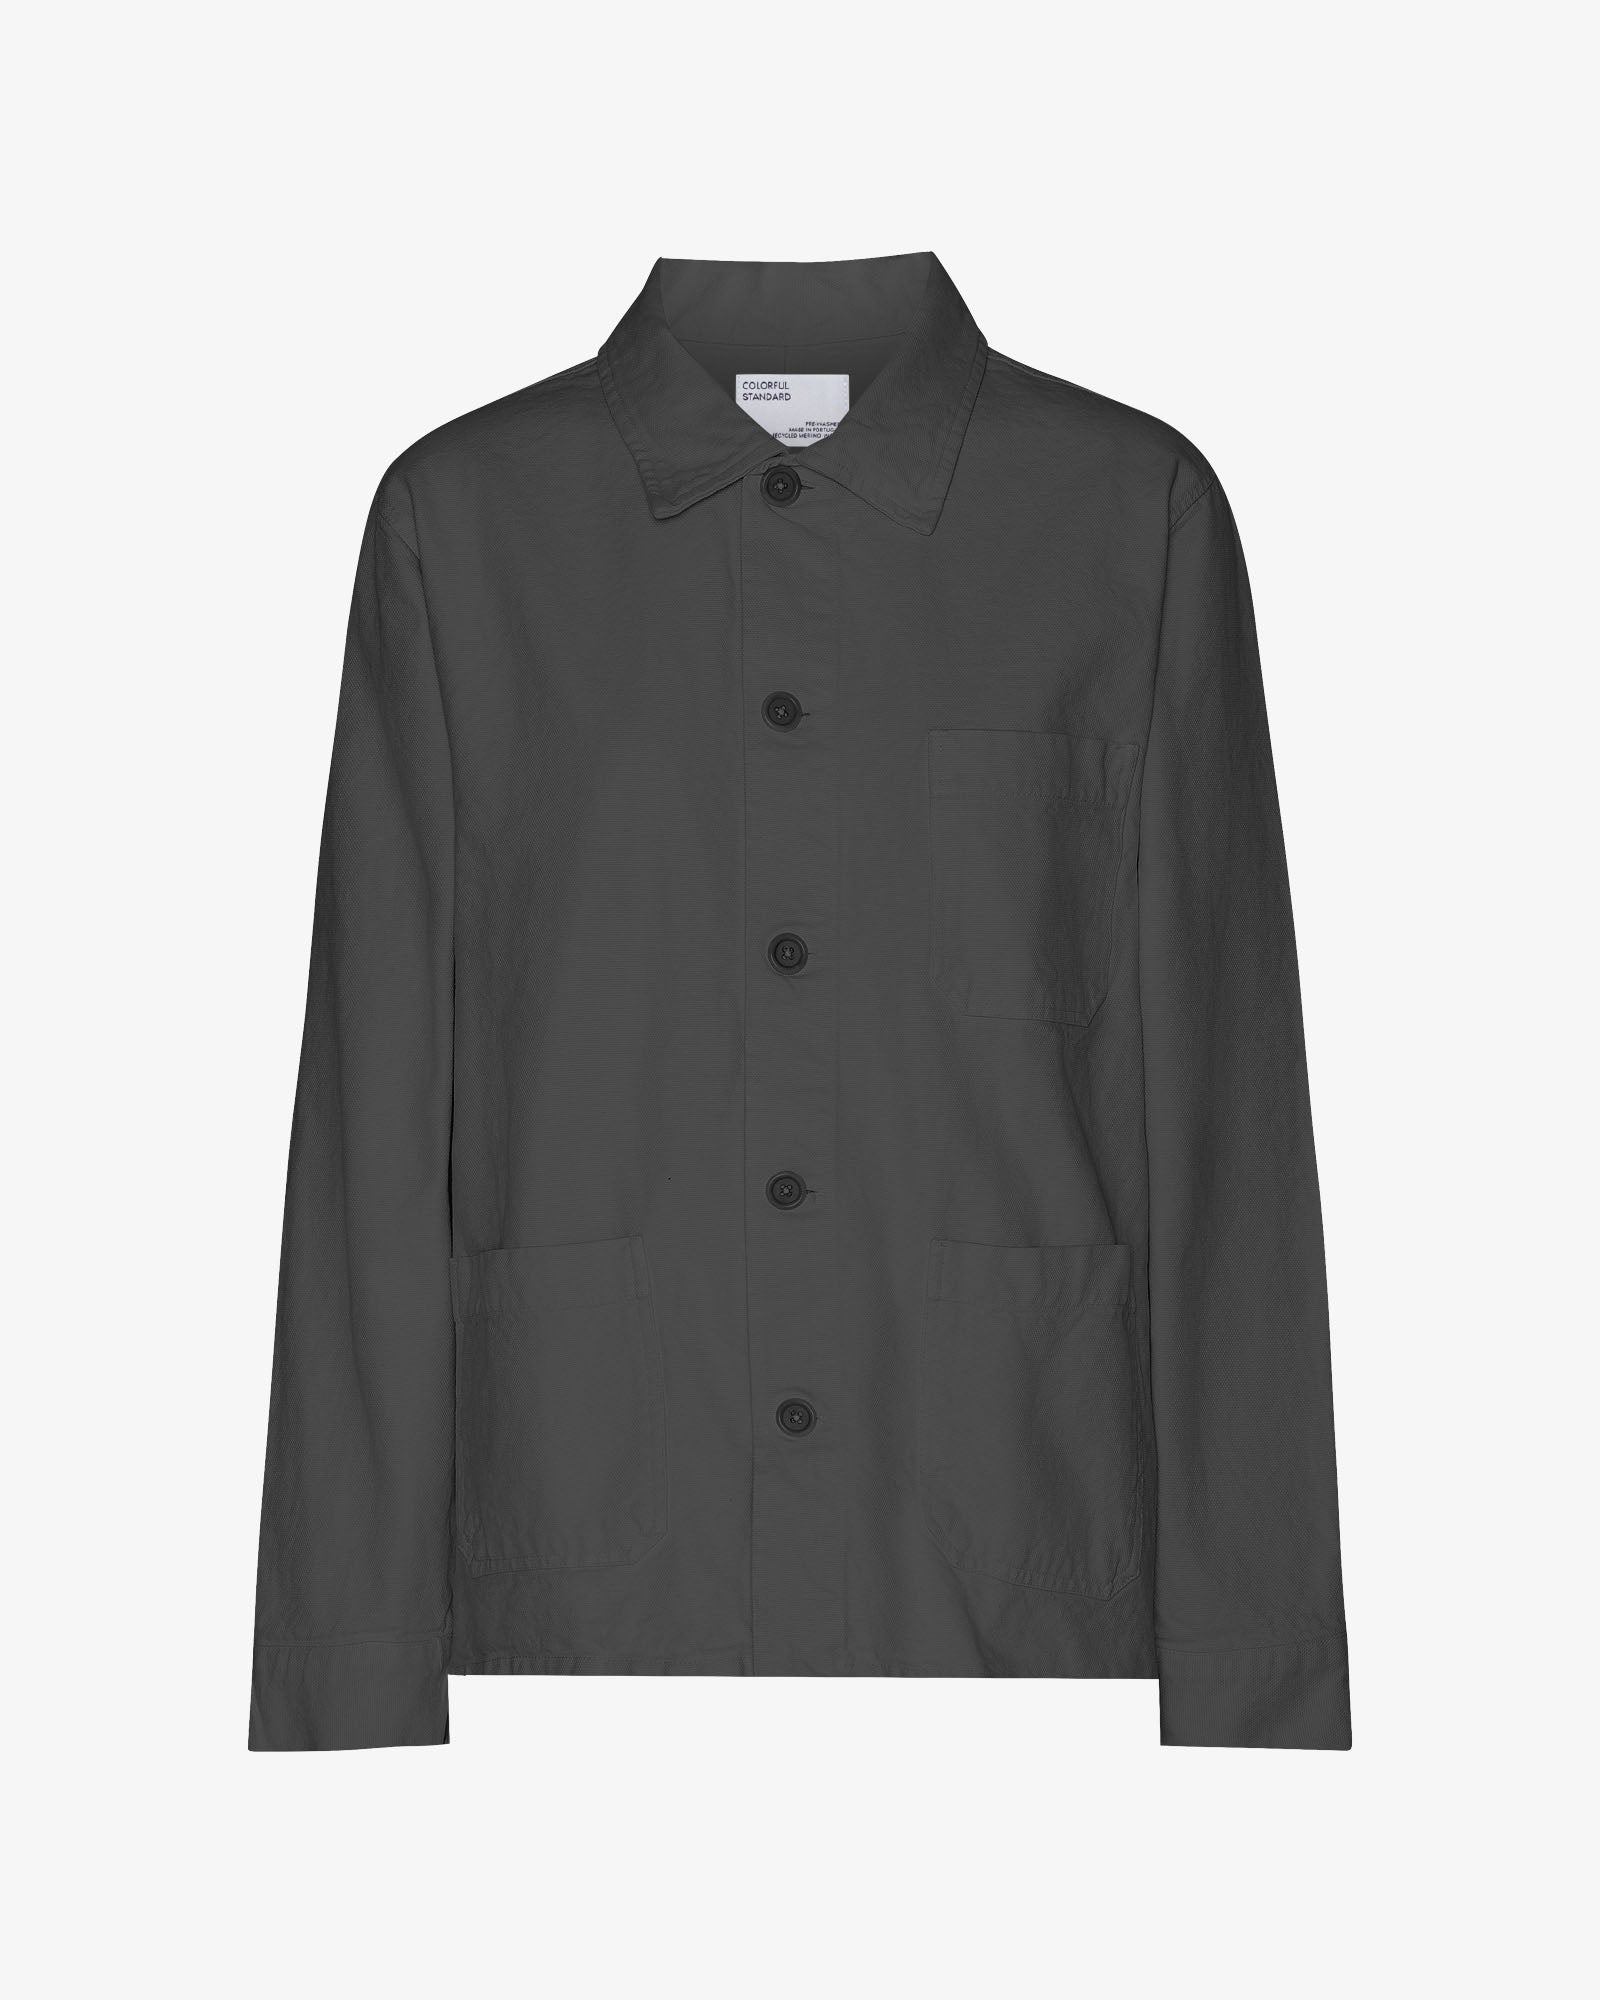 Organic Workwear Jacket - Lava Grey